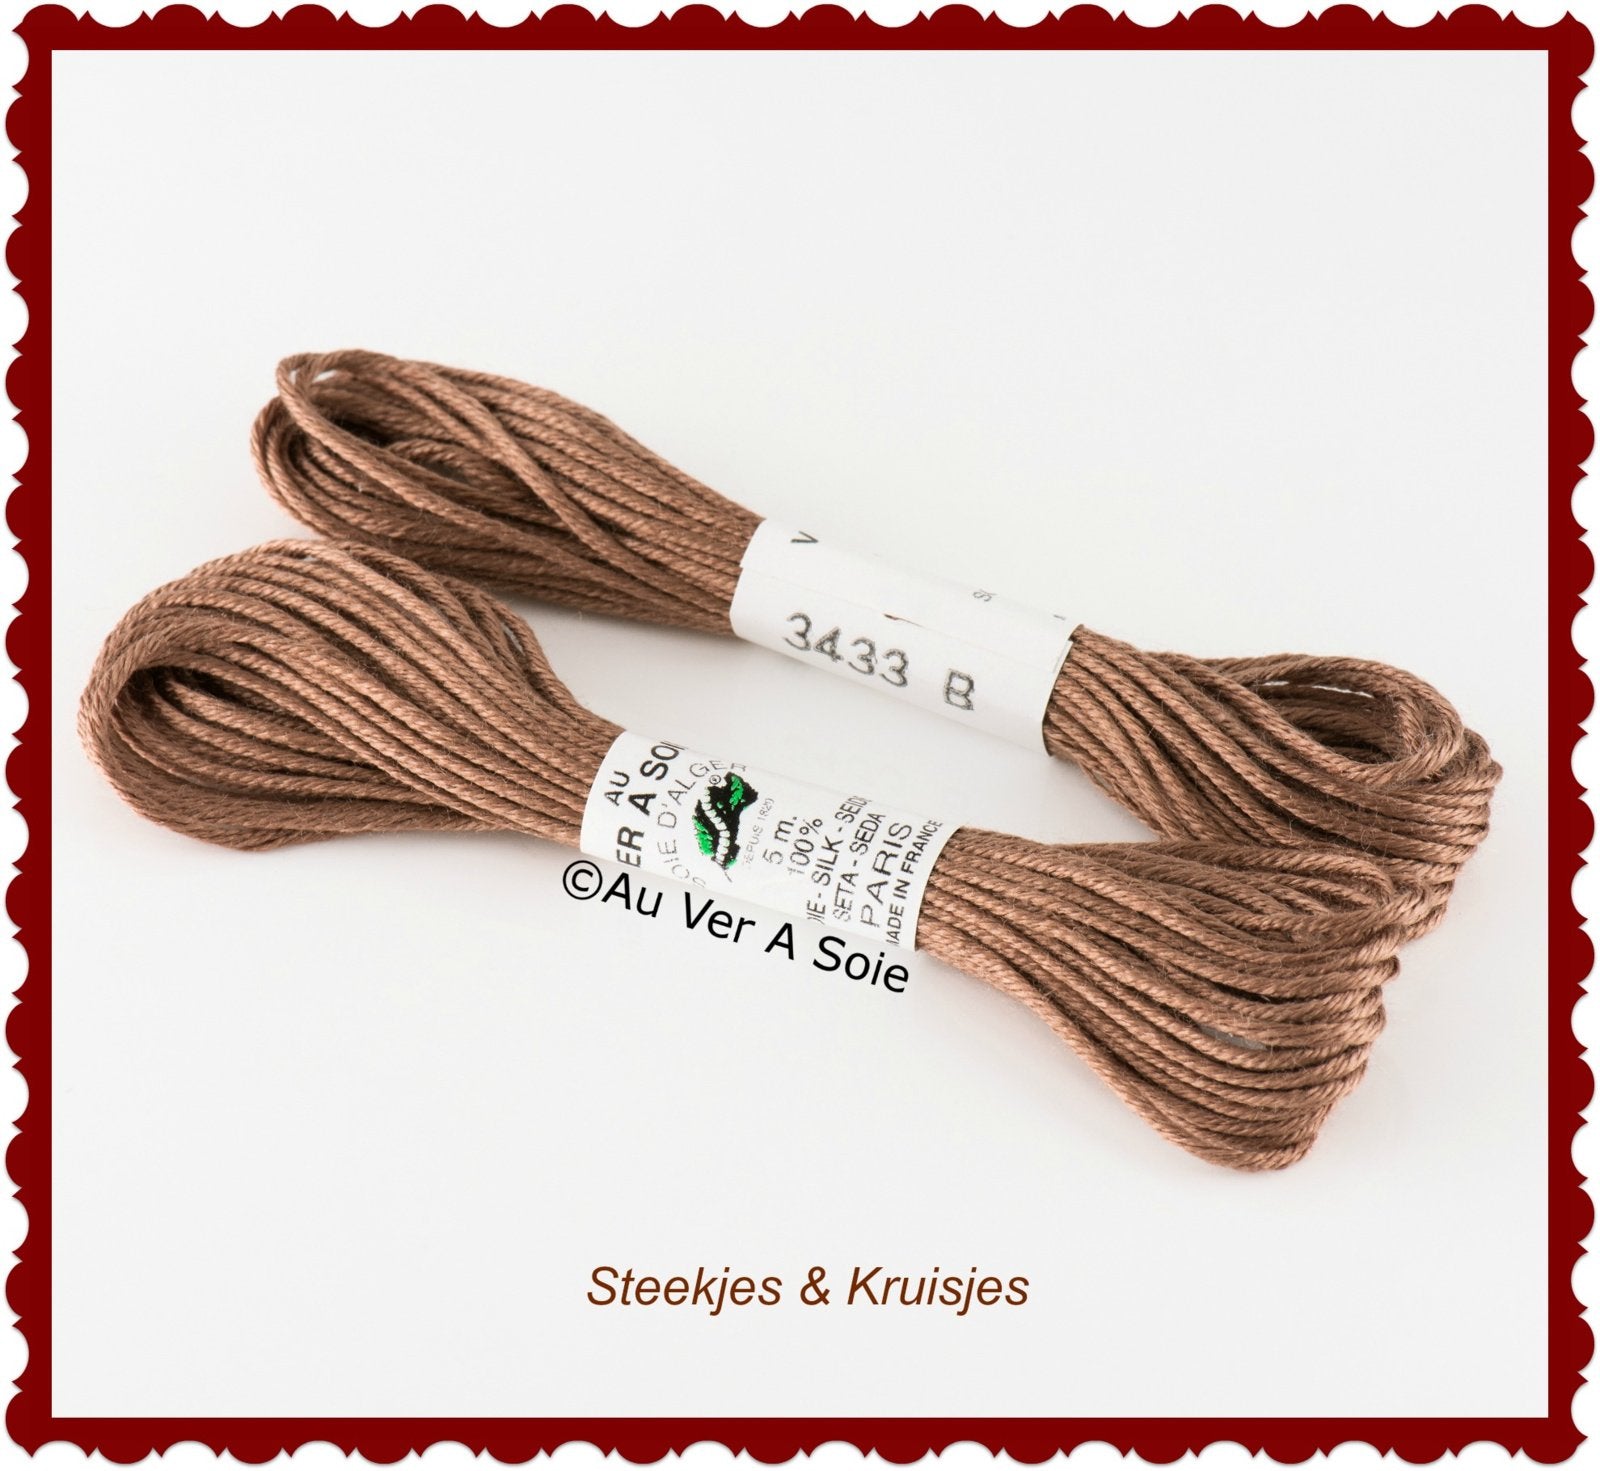 Au ver ie "soie d'alger" silk yarn color no. 3433